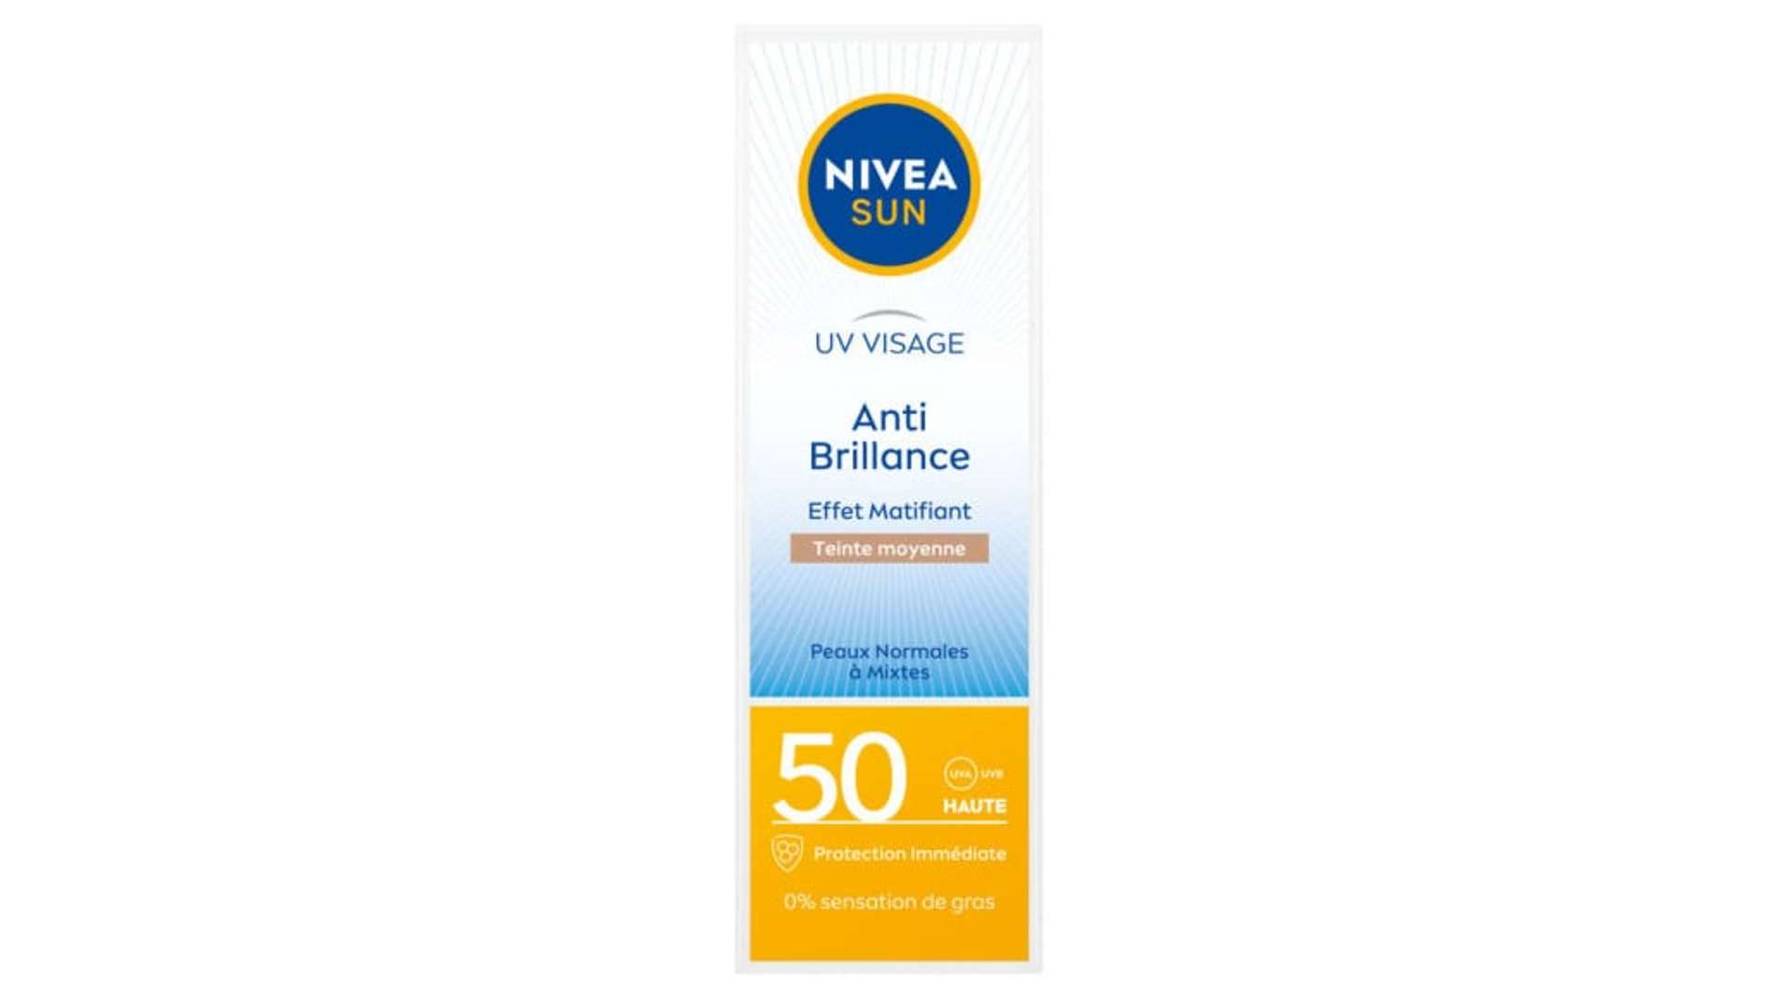 Nivea Sun Protection solaire UV Visage 50 teint{e Le tube de 50ml